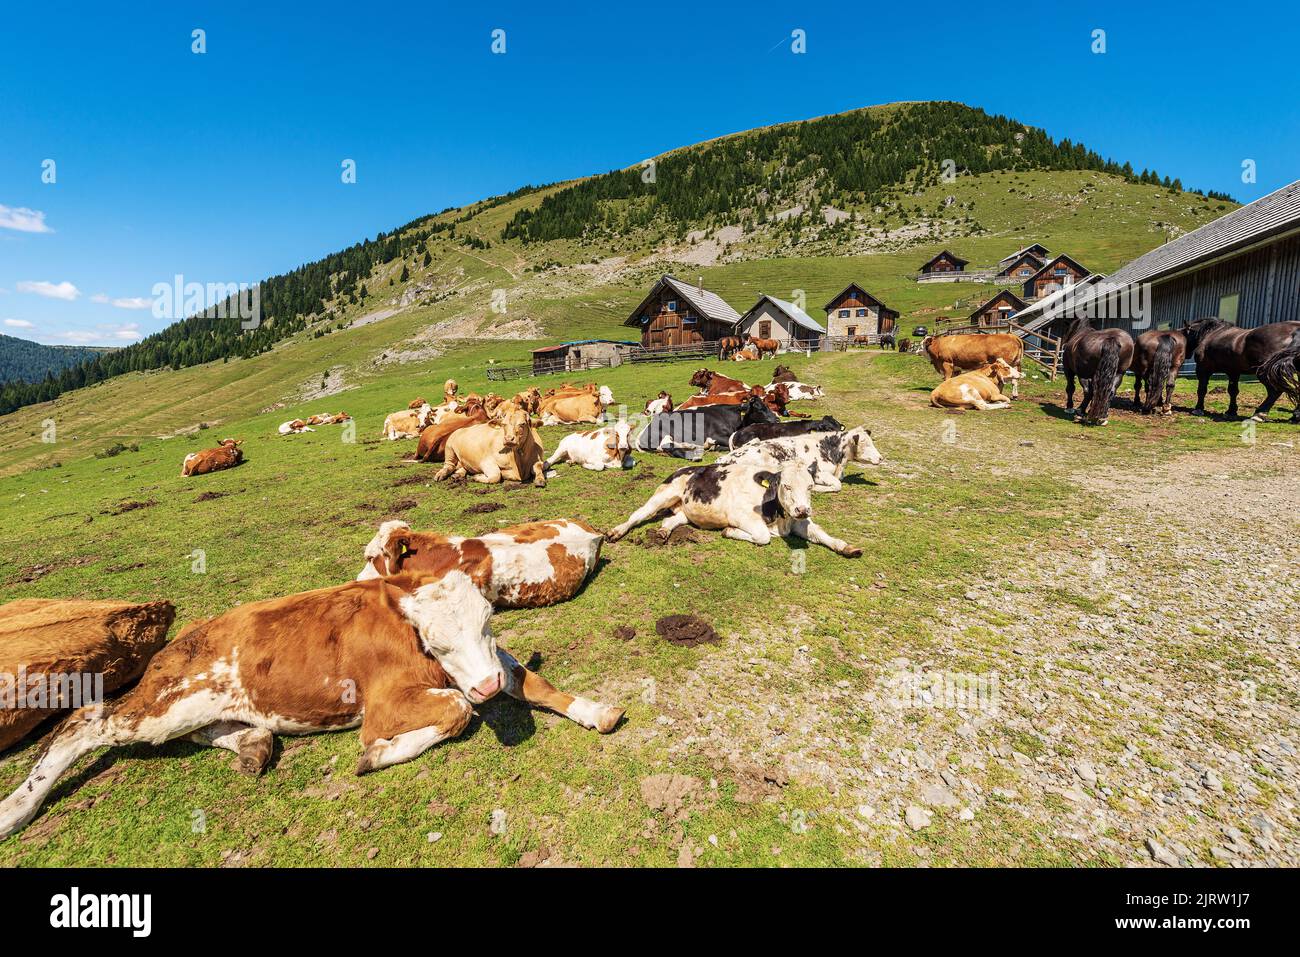 Herd of dairy cows and horses in a mountain pasture, Italy-Austria border, Feistritz an der Gail, Osternig, Carinthia, Julian Alps, Austria, Europe. Stock Photo